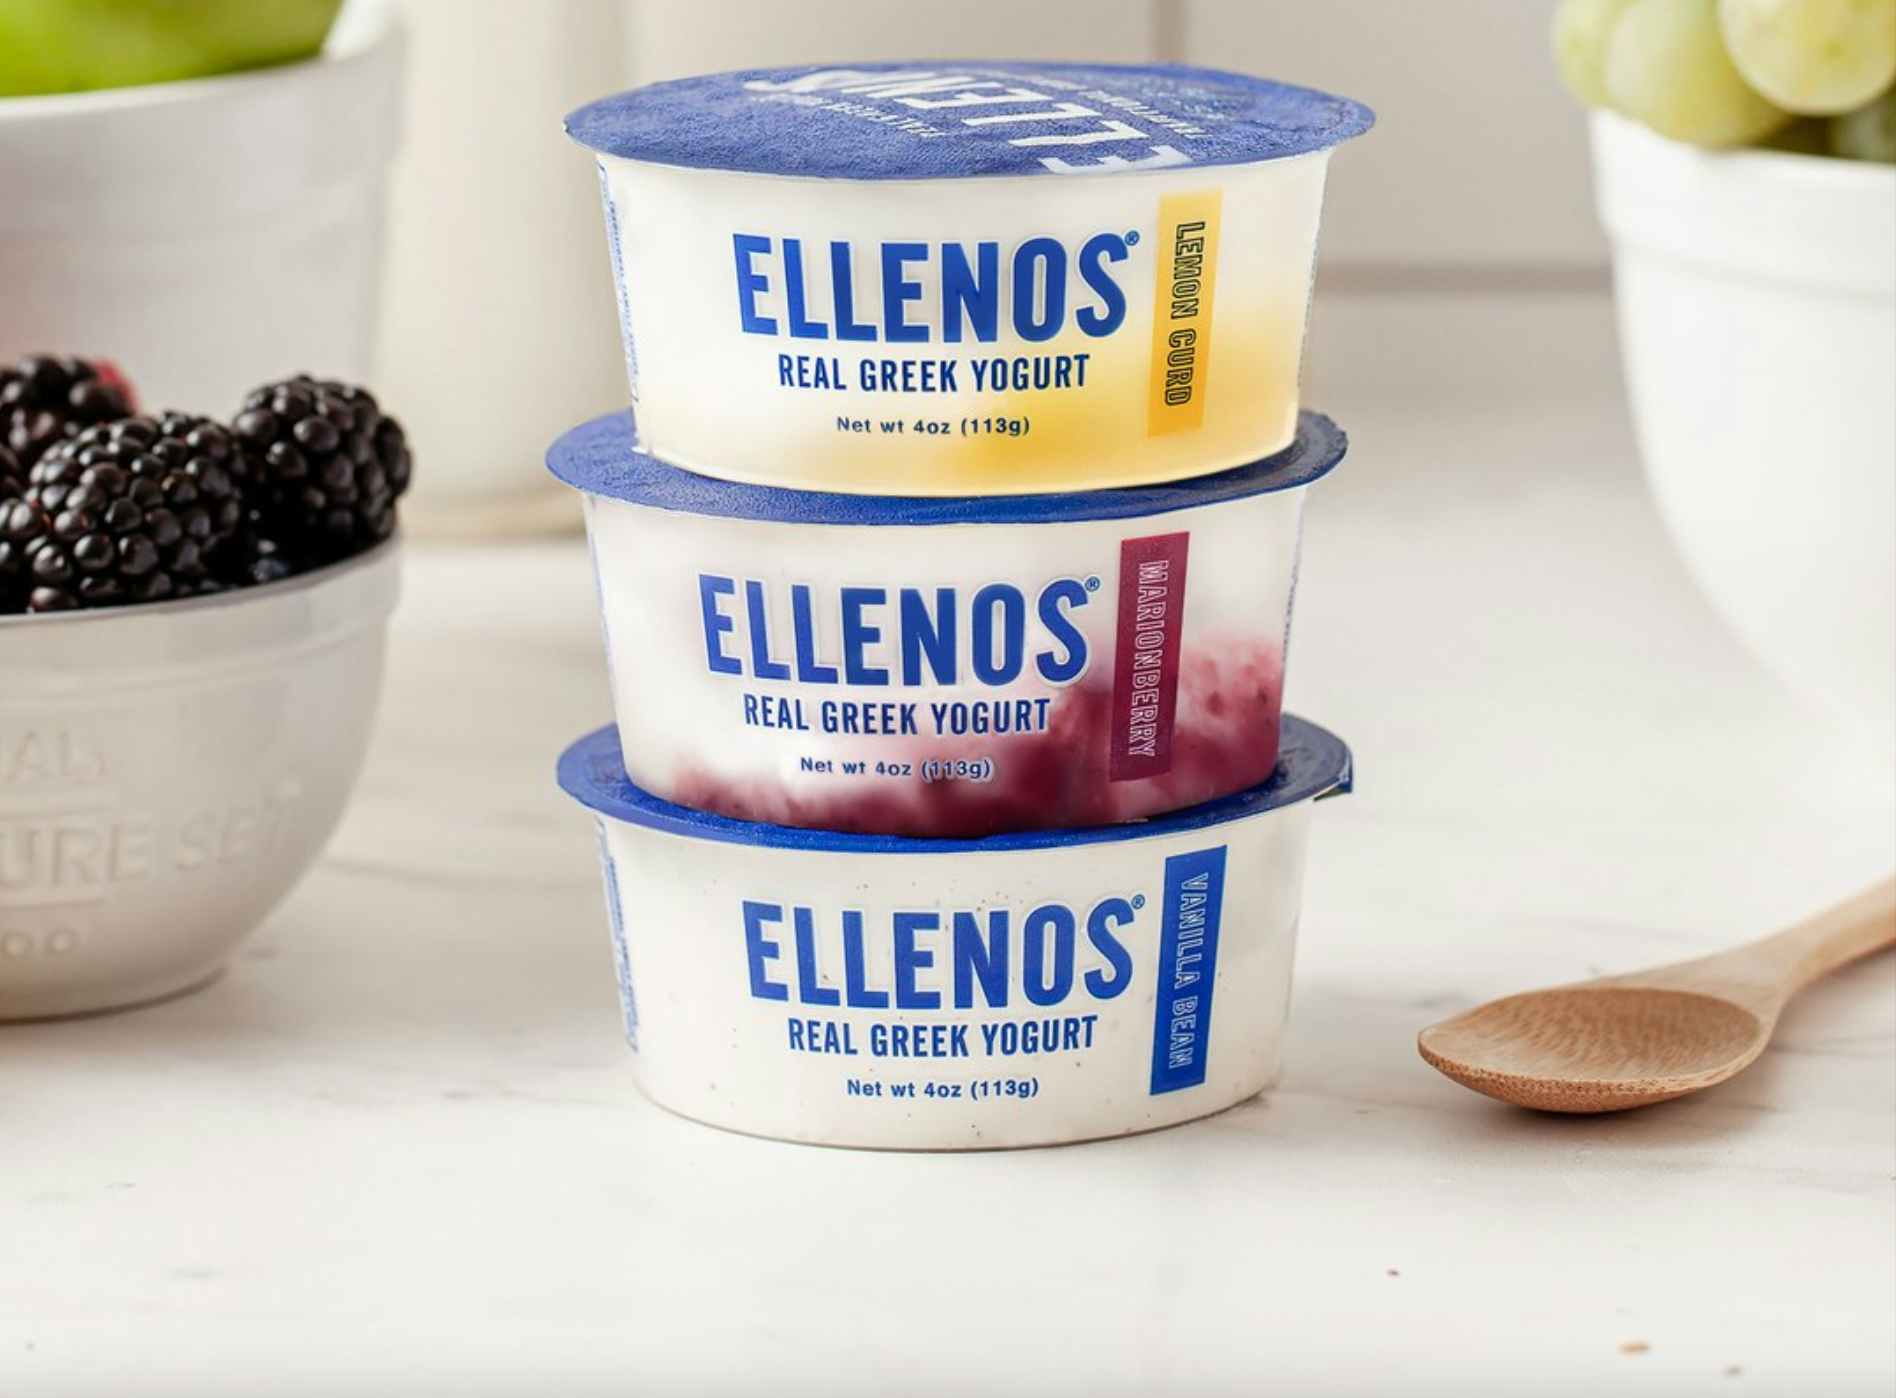 Ellenos 4-oz yogurt cups sold at Costco